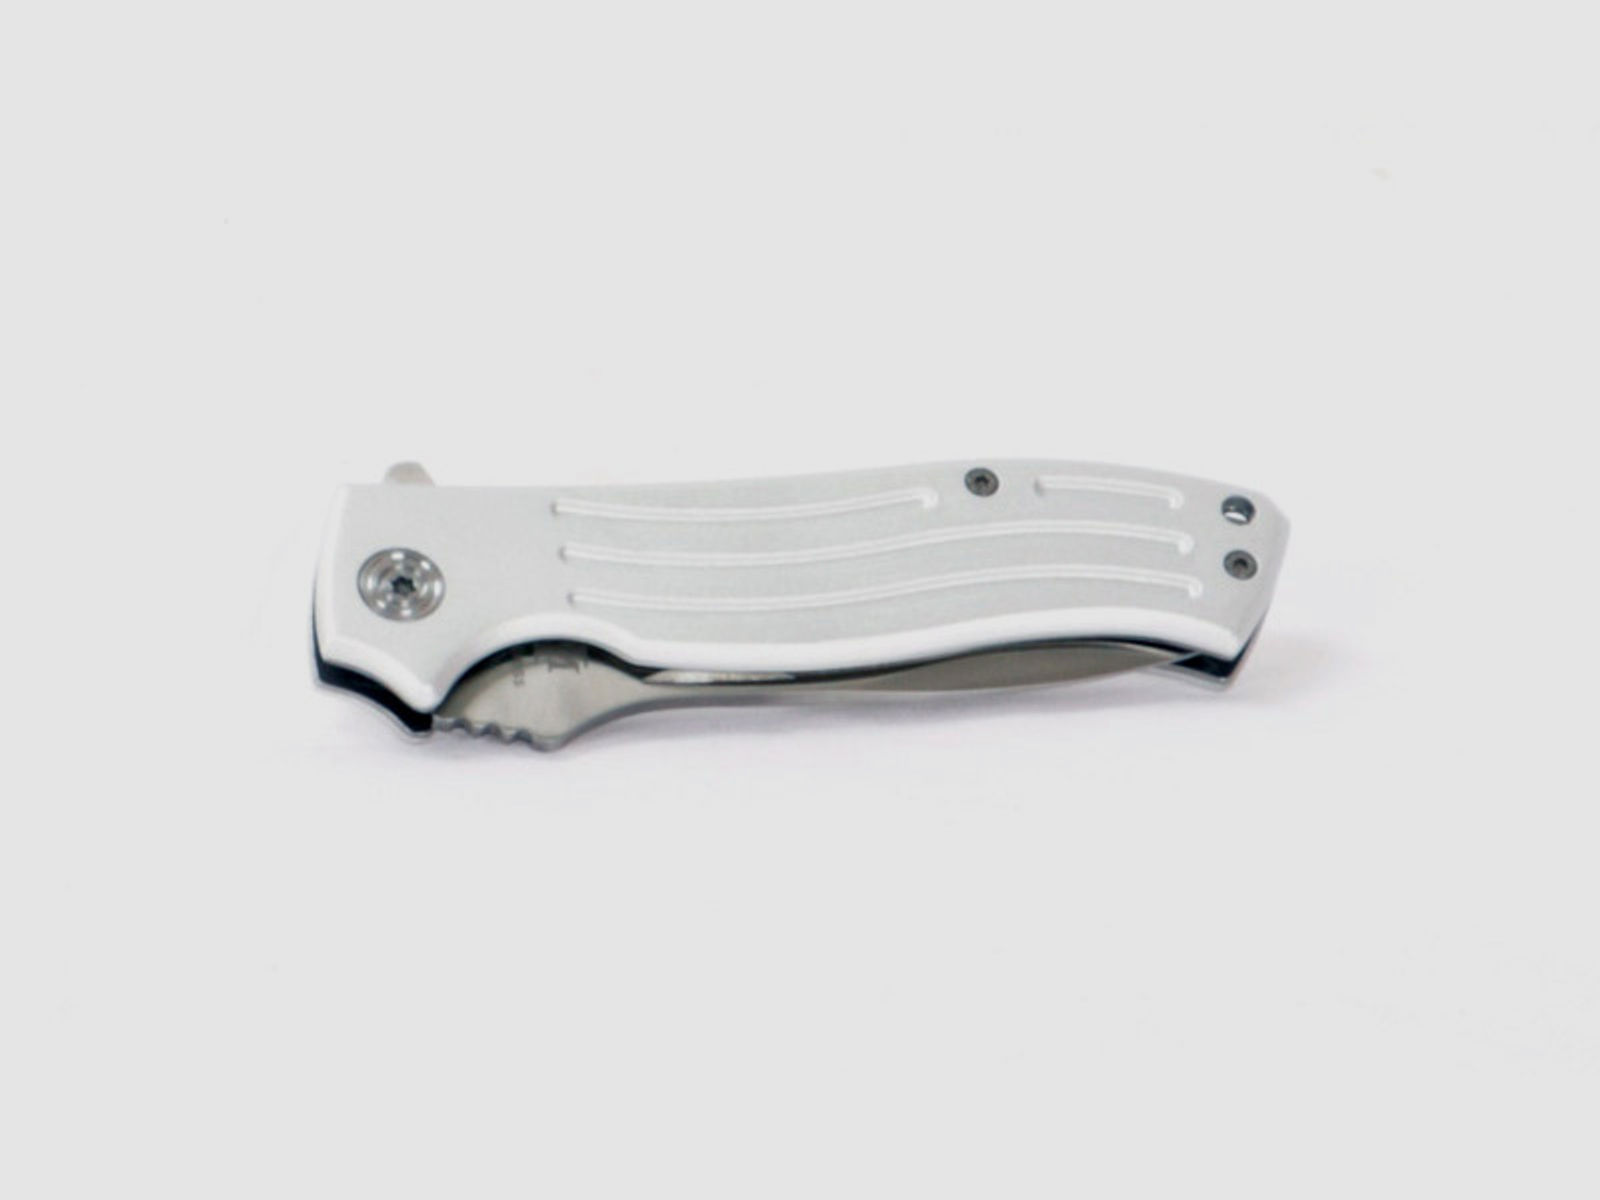 Einhandmesser Stahl KlingenlĂ¤nge 8 cm Aluminium Griffschalen (P18)